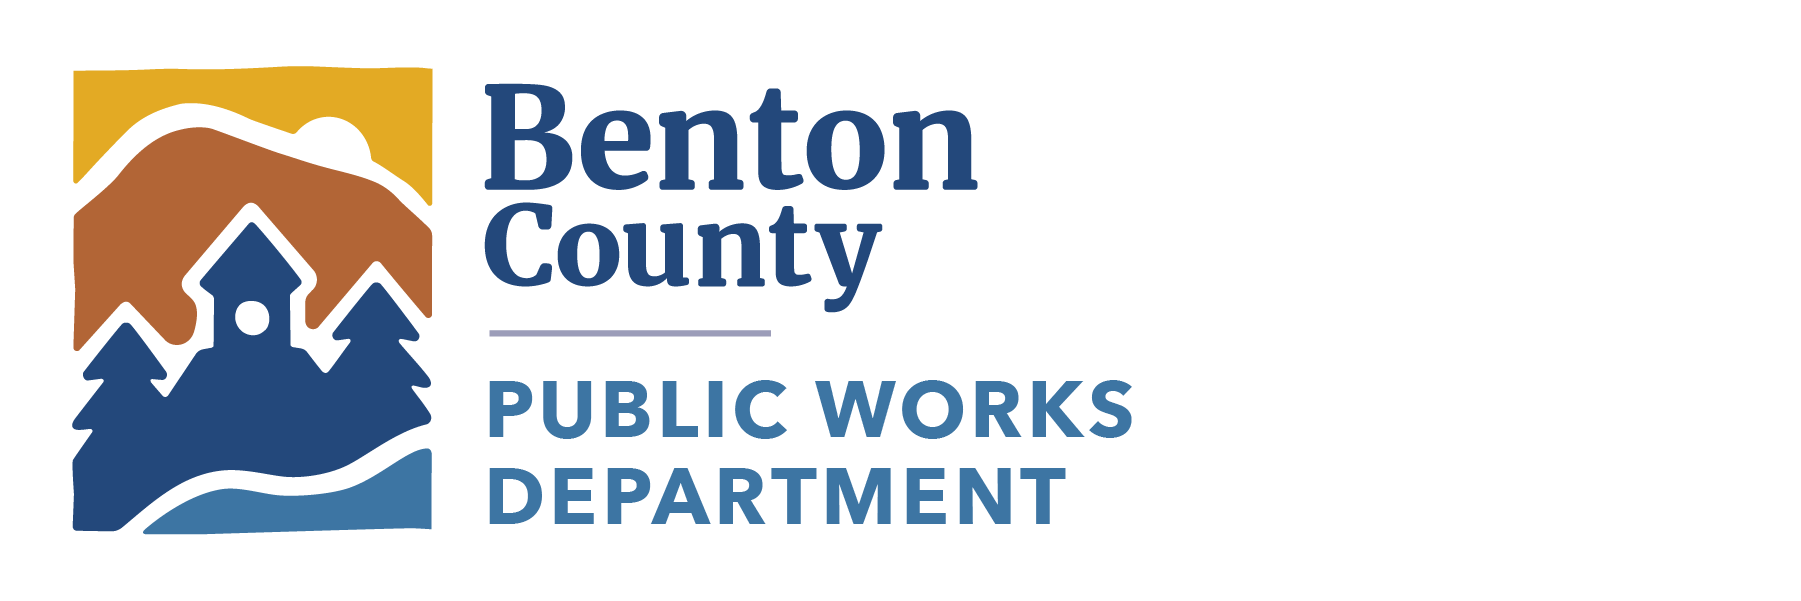 Benton County Public Works logo